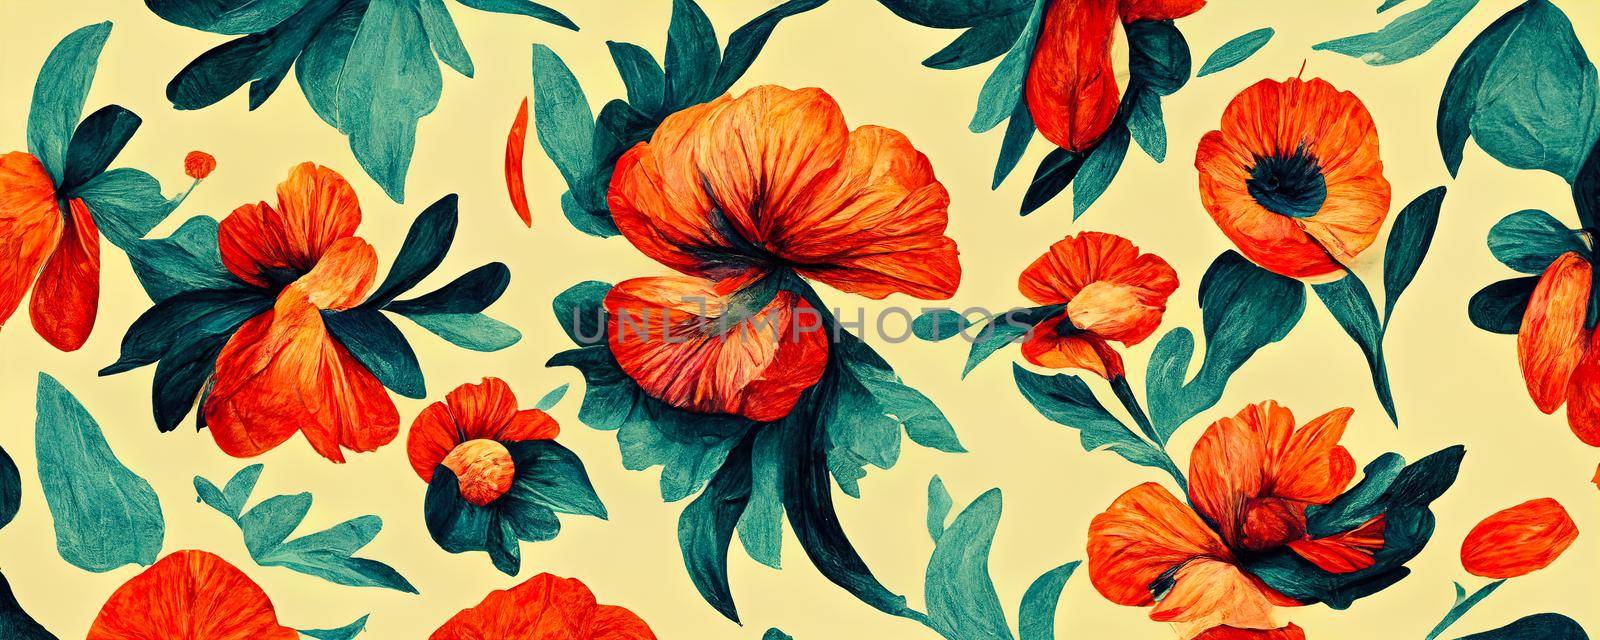 abstract flower illustration, creative flower background.